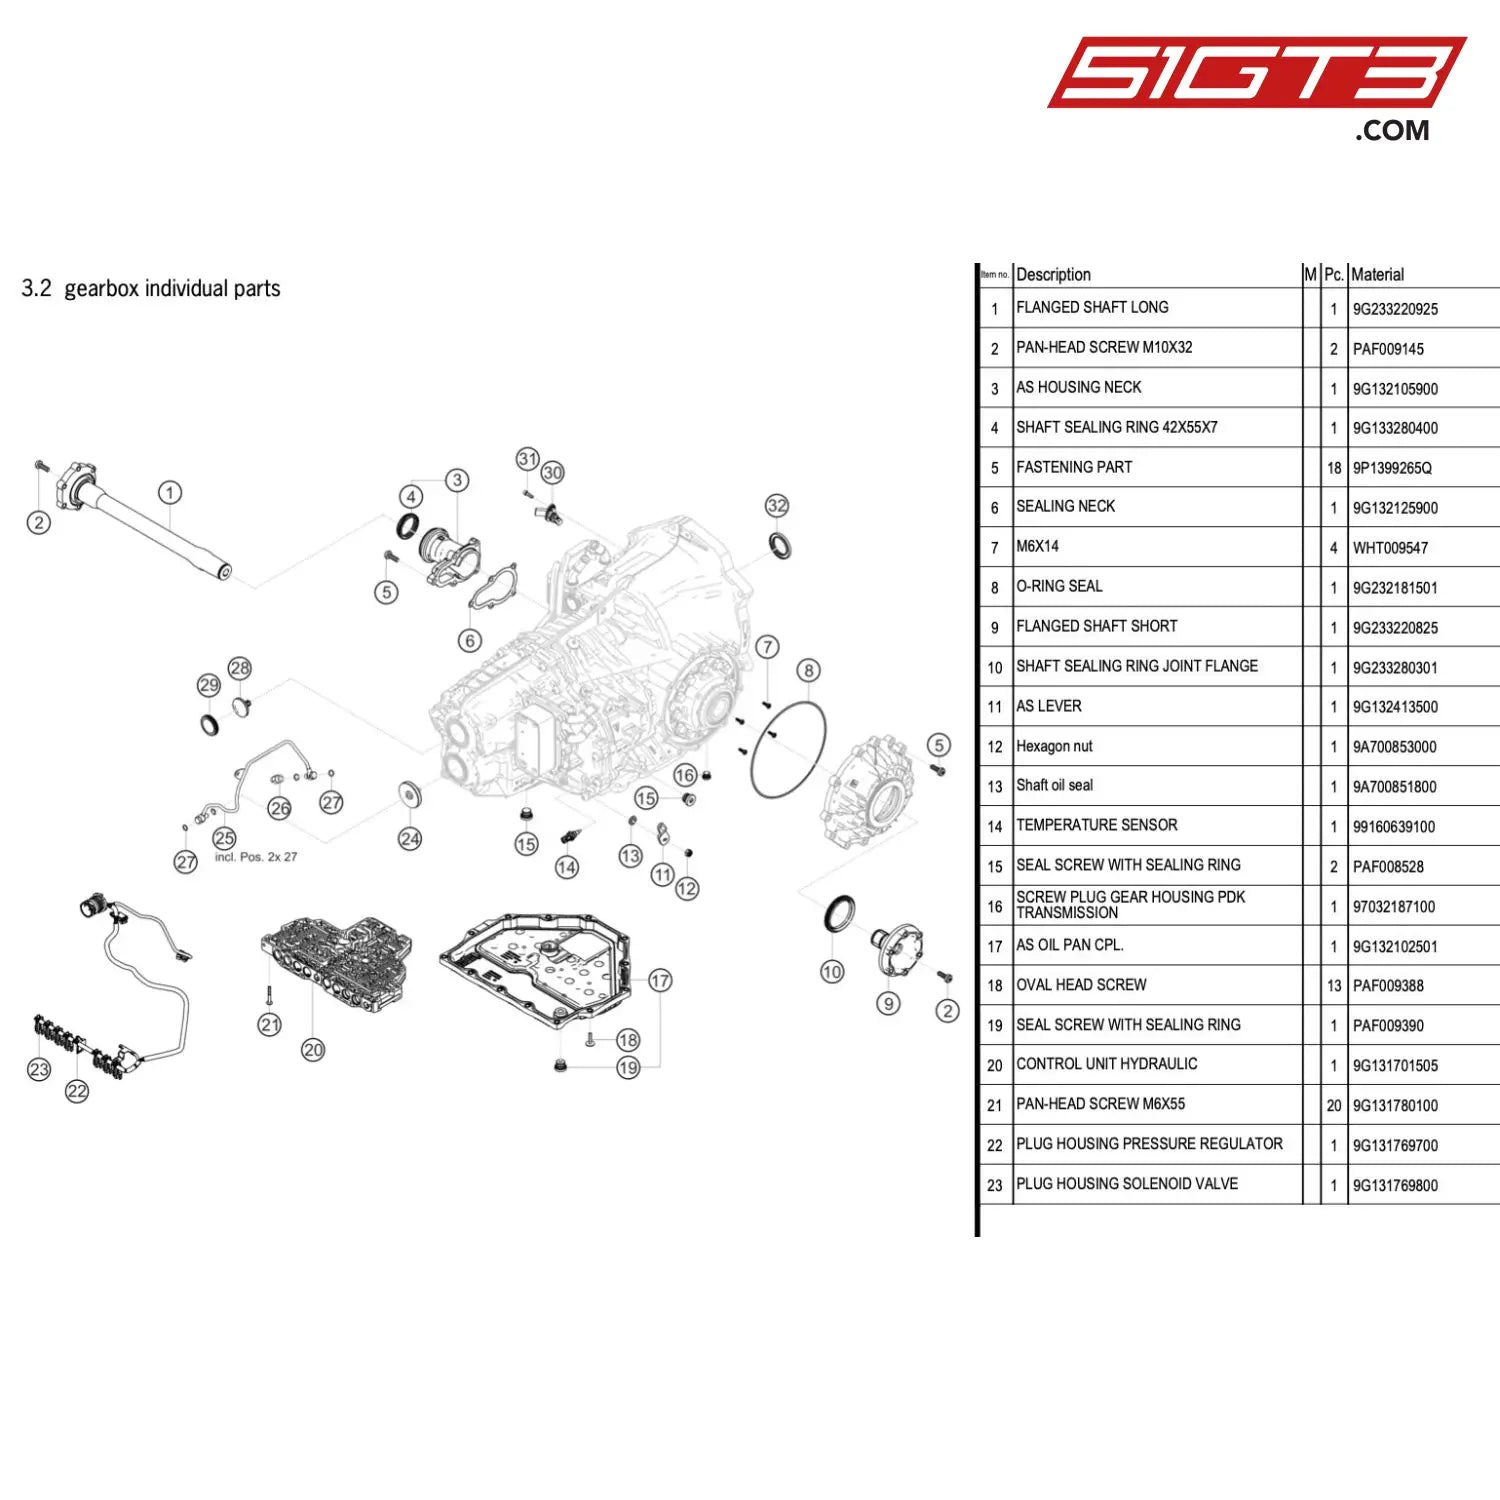 Plug Housing Solenoid Valve - 9G131769800 [Porsche 718 Cayman Gt4 Rs Clubsport] Gearbox Individual